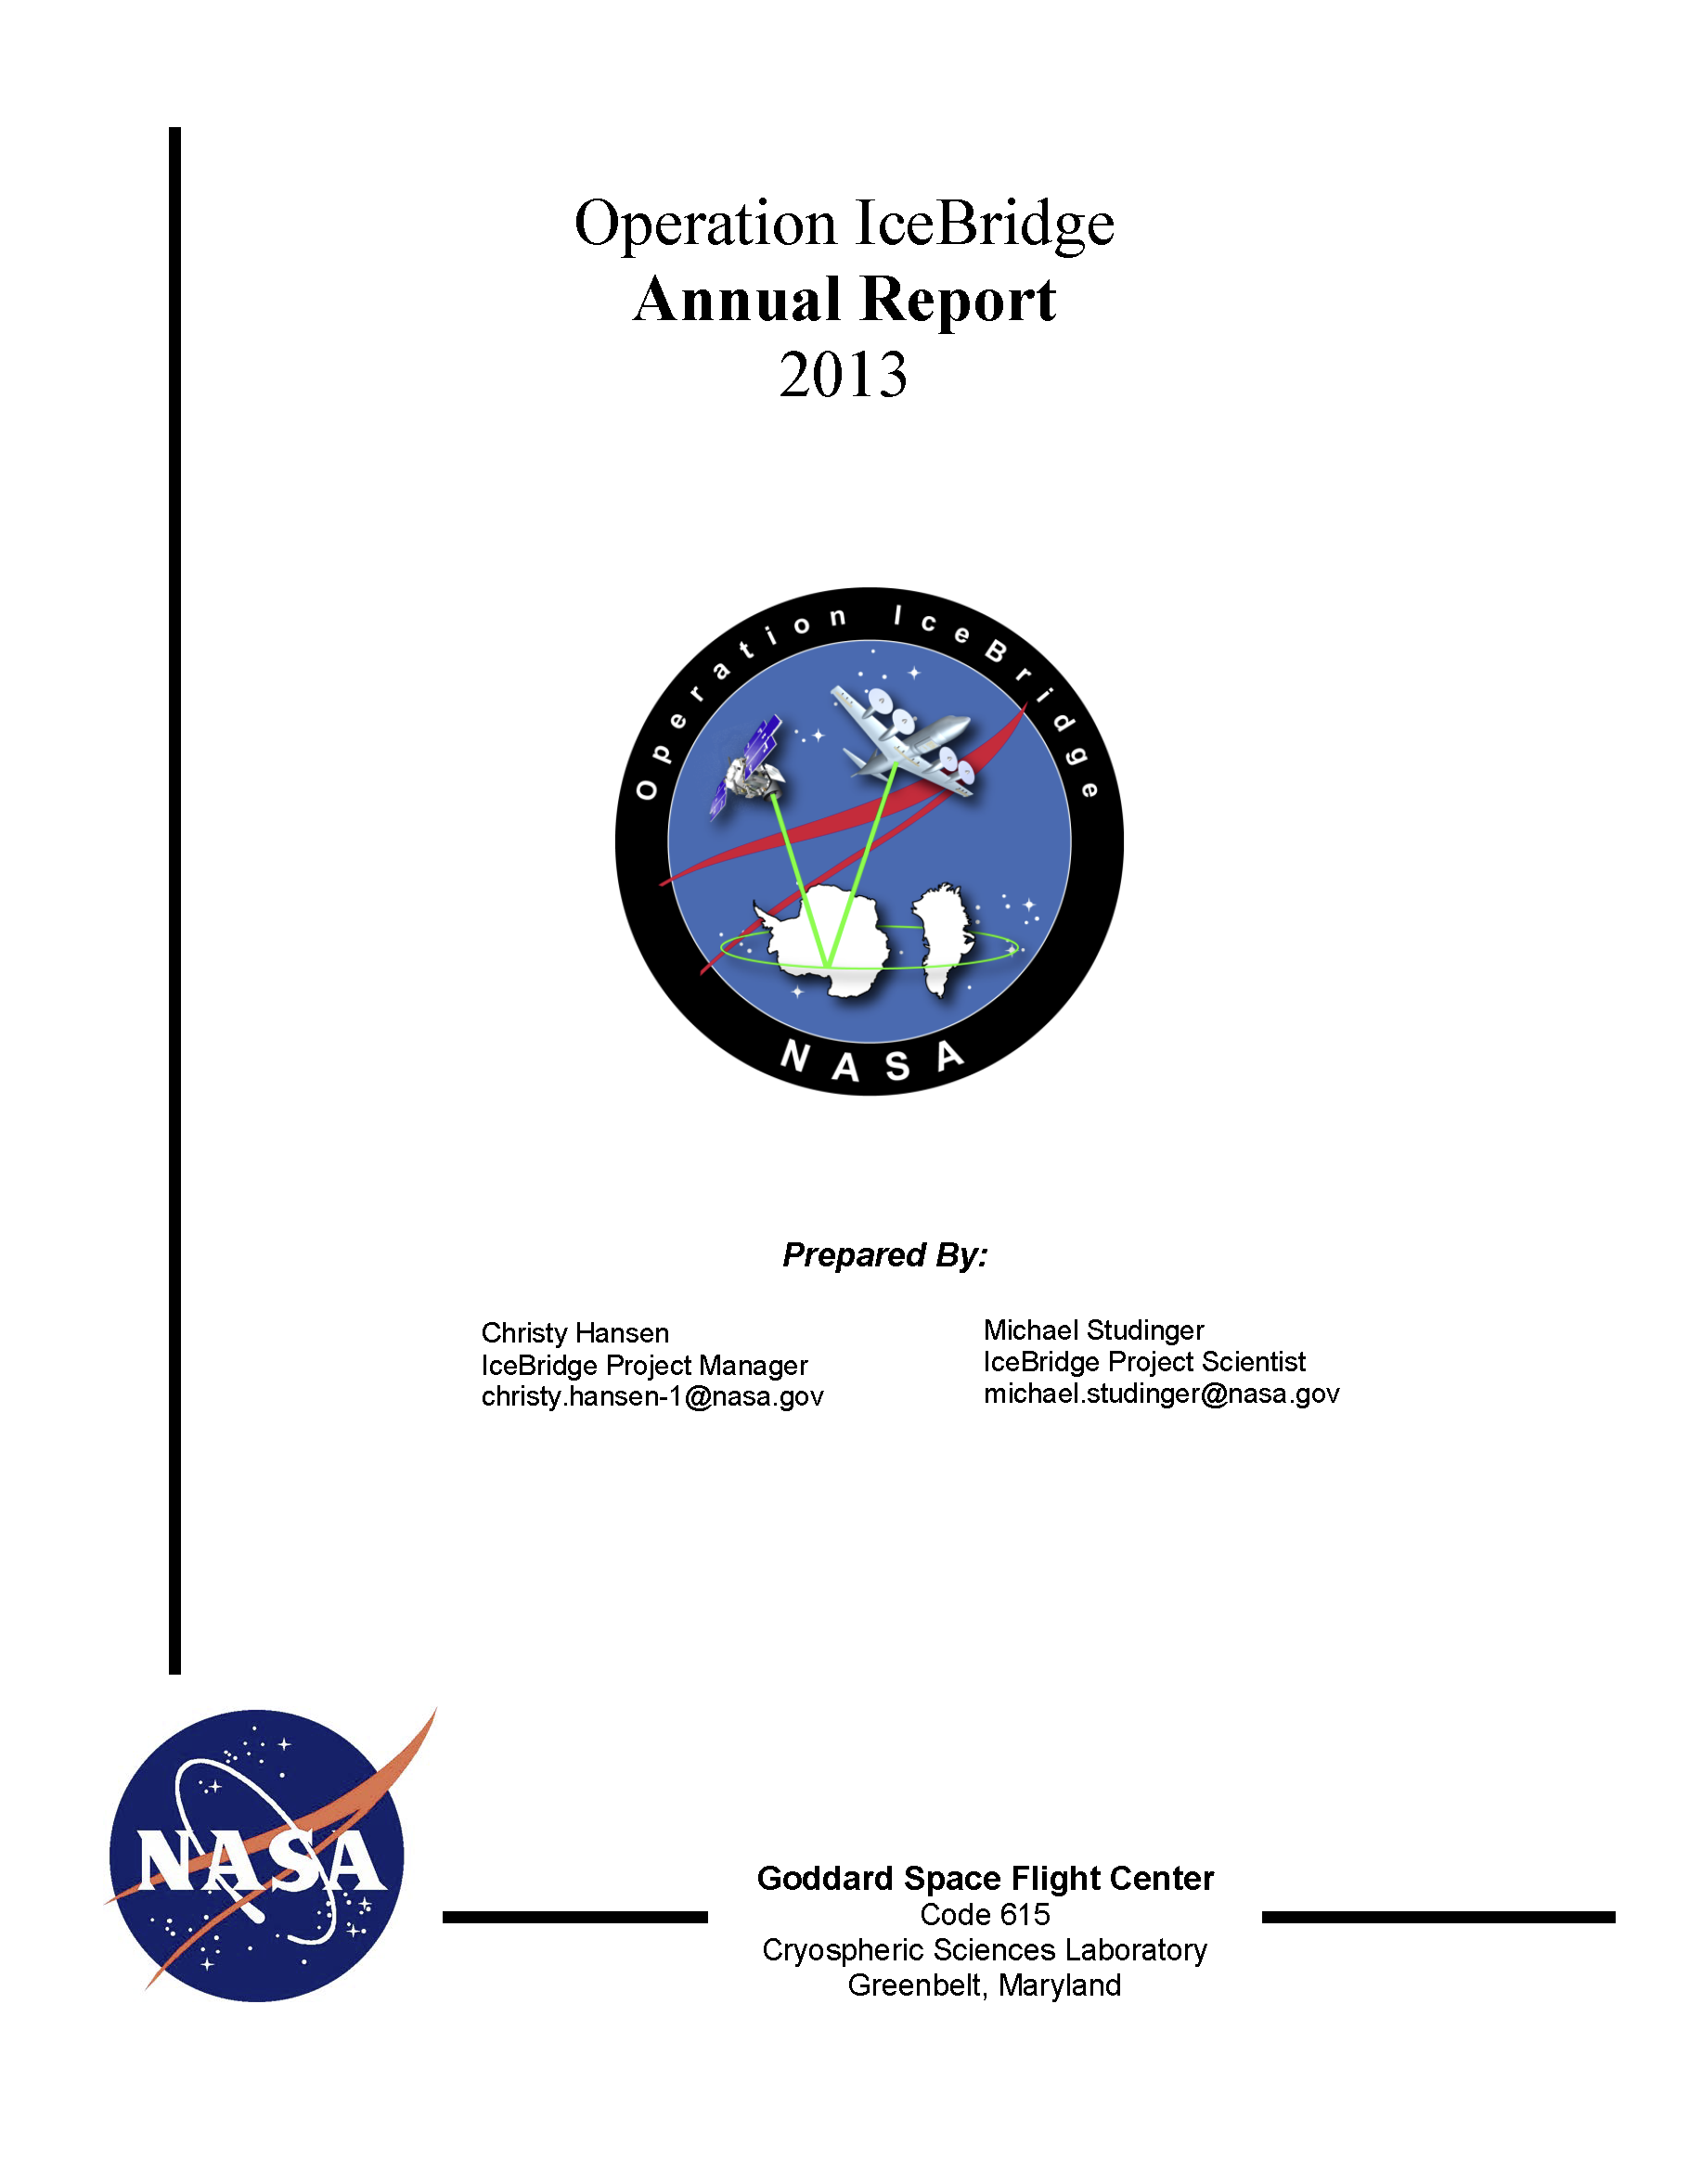 2013 Annual Report Screenshot